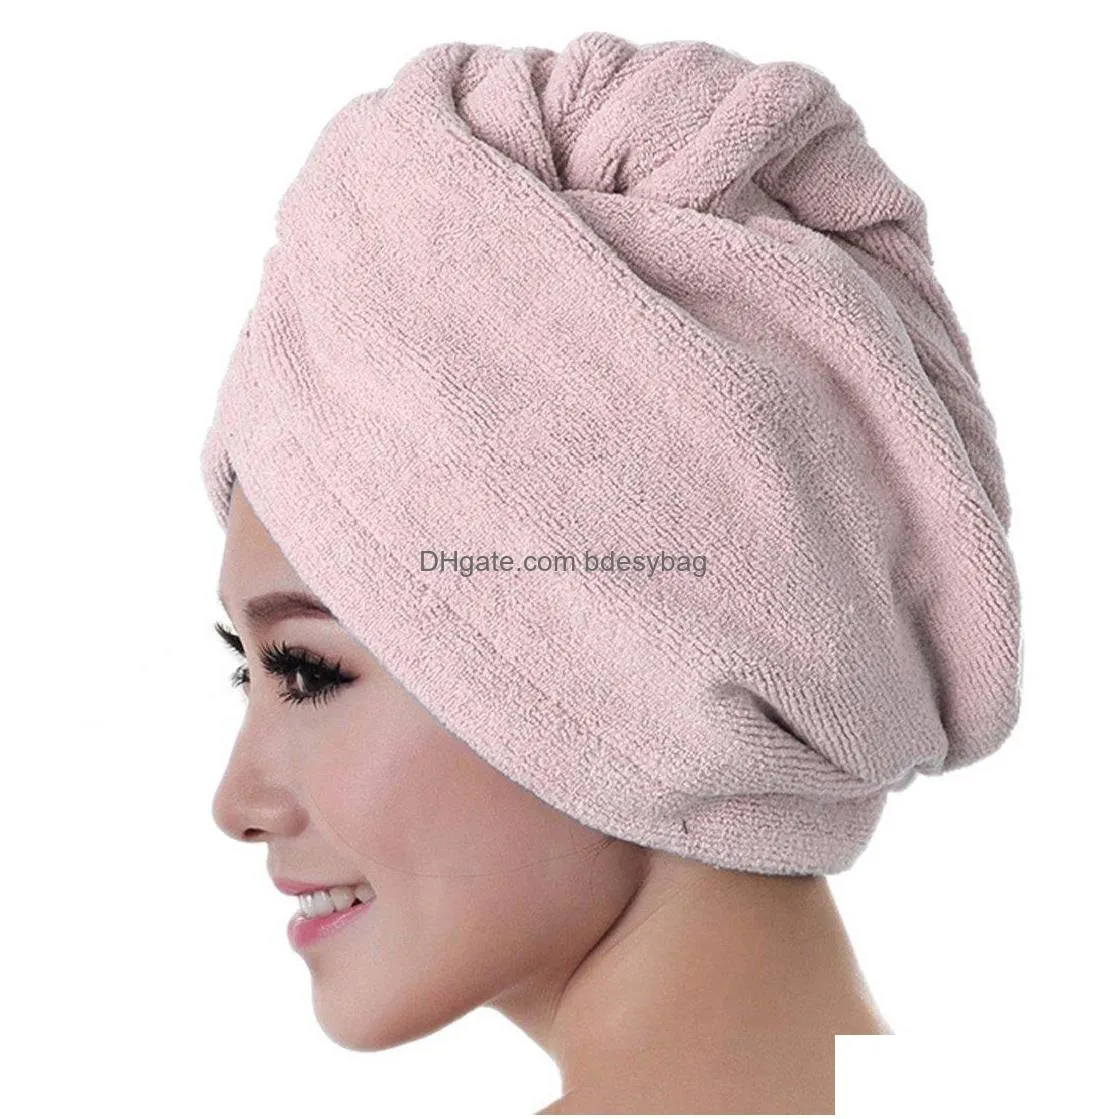 microfiber bath towel dry hair quickdrying women soft shower cap hat turban headgear bathing tools